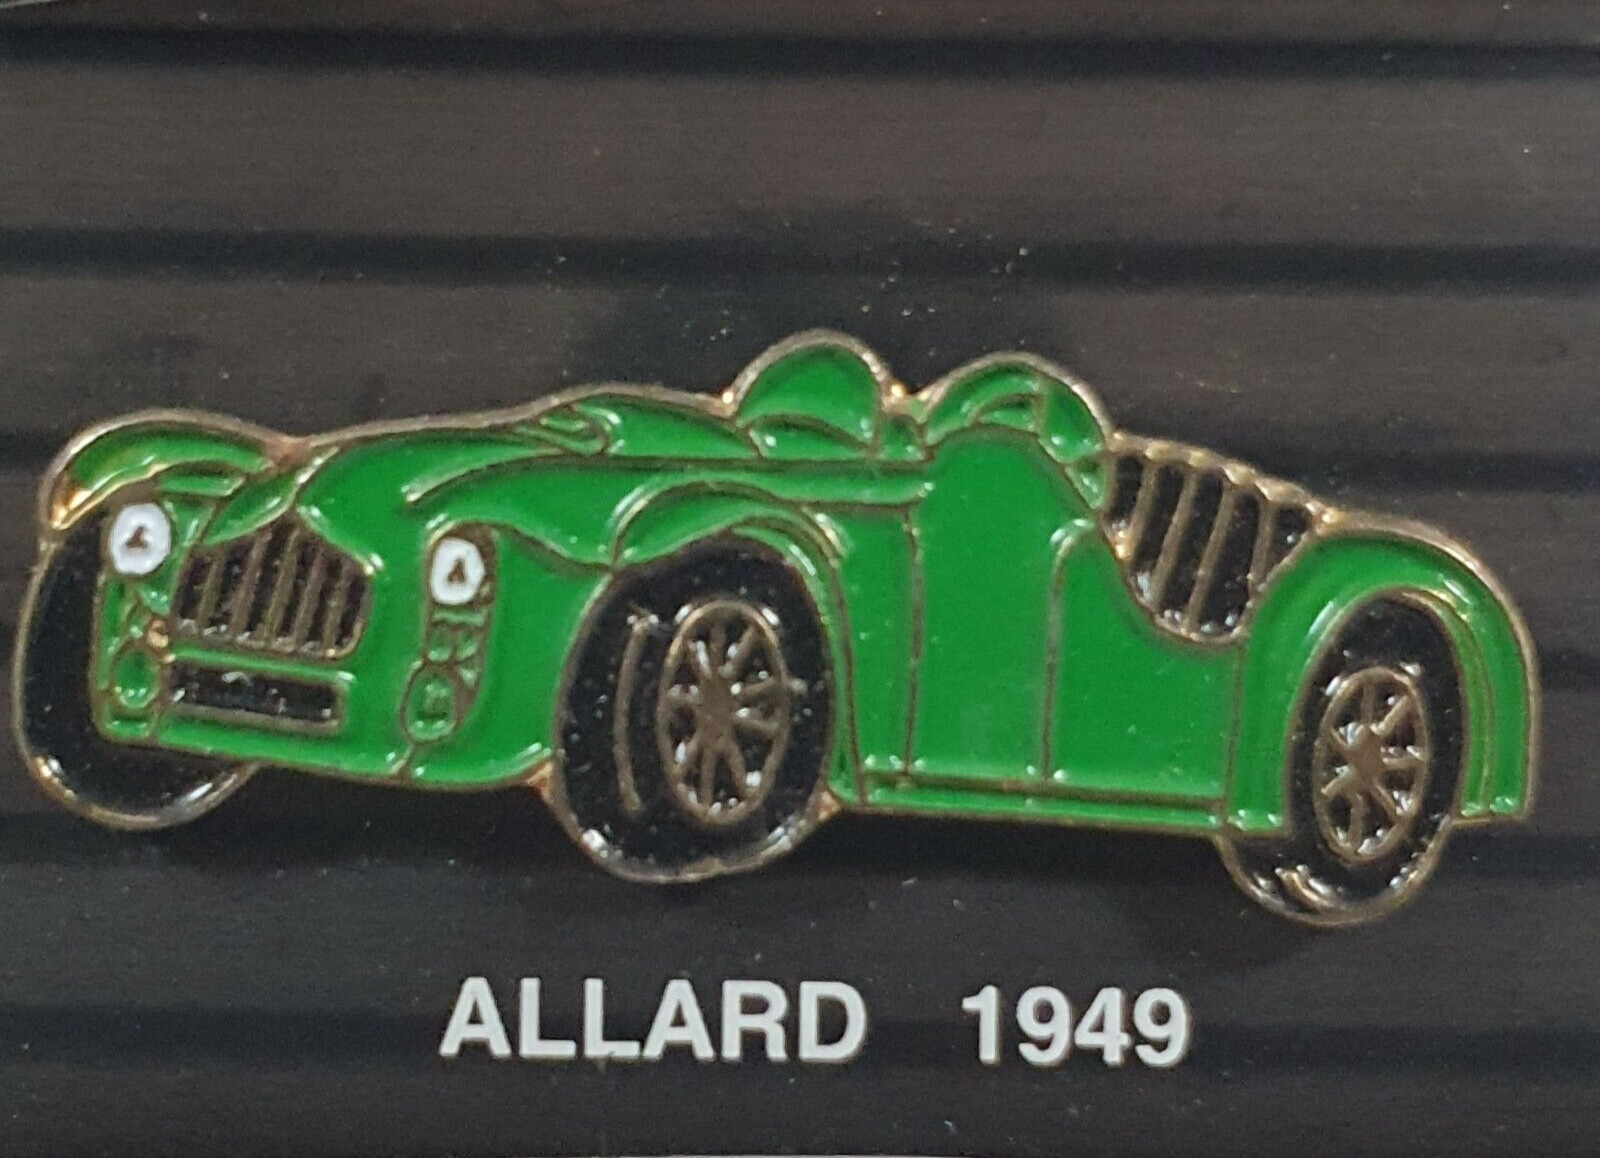 Allard 1949 Classic Car Enamel pin Badge  Vintage Rally - Racing